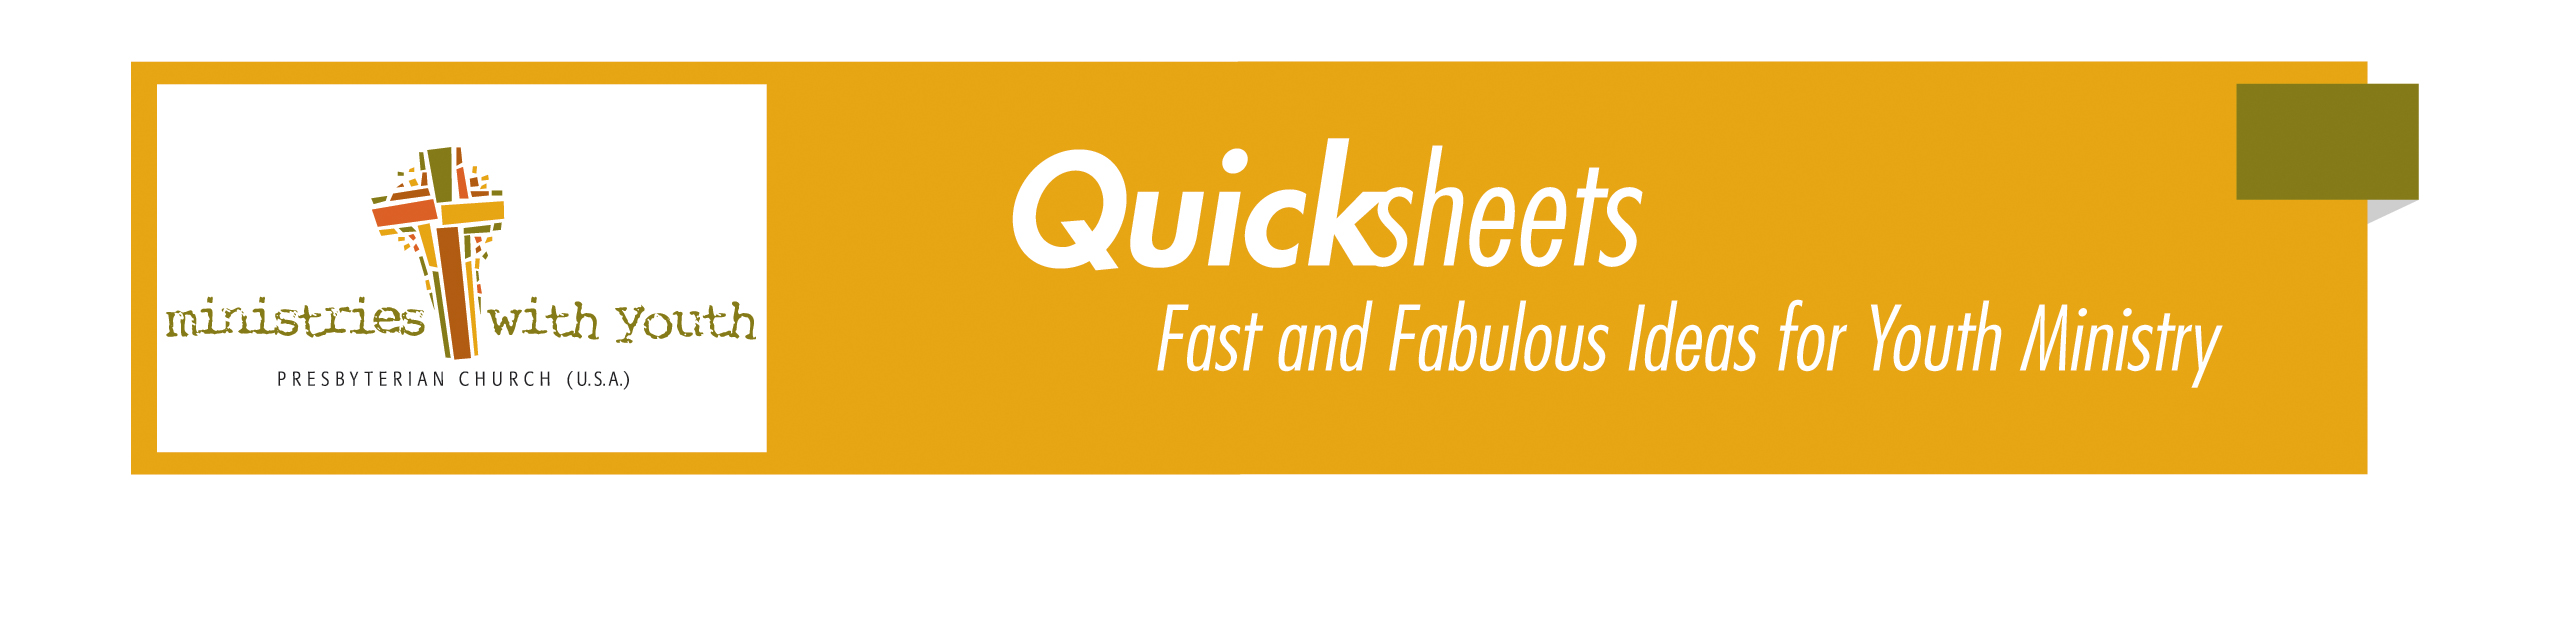 Quicksheets banner art